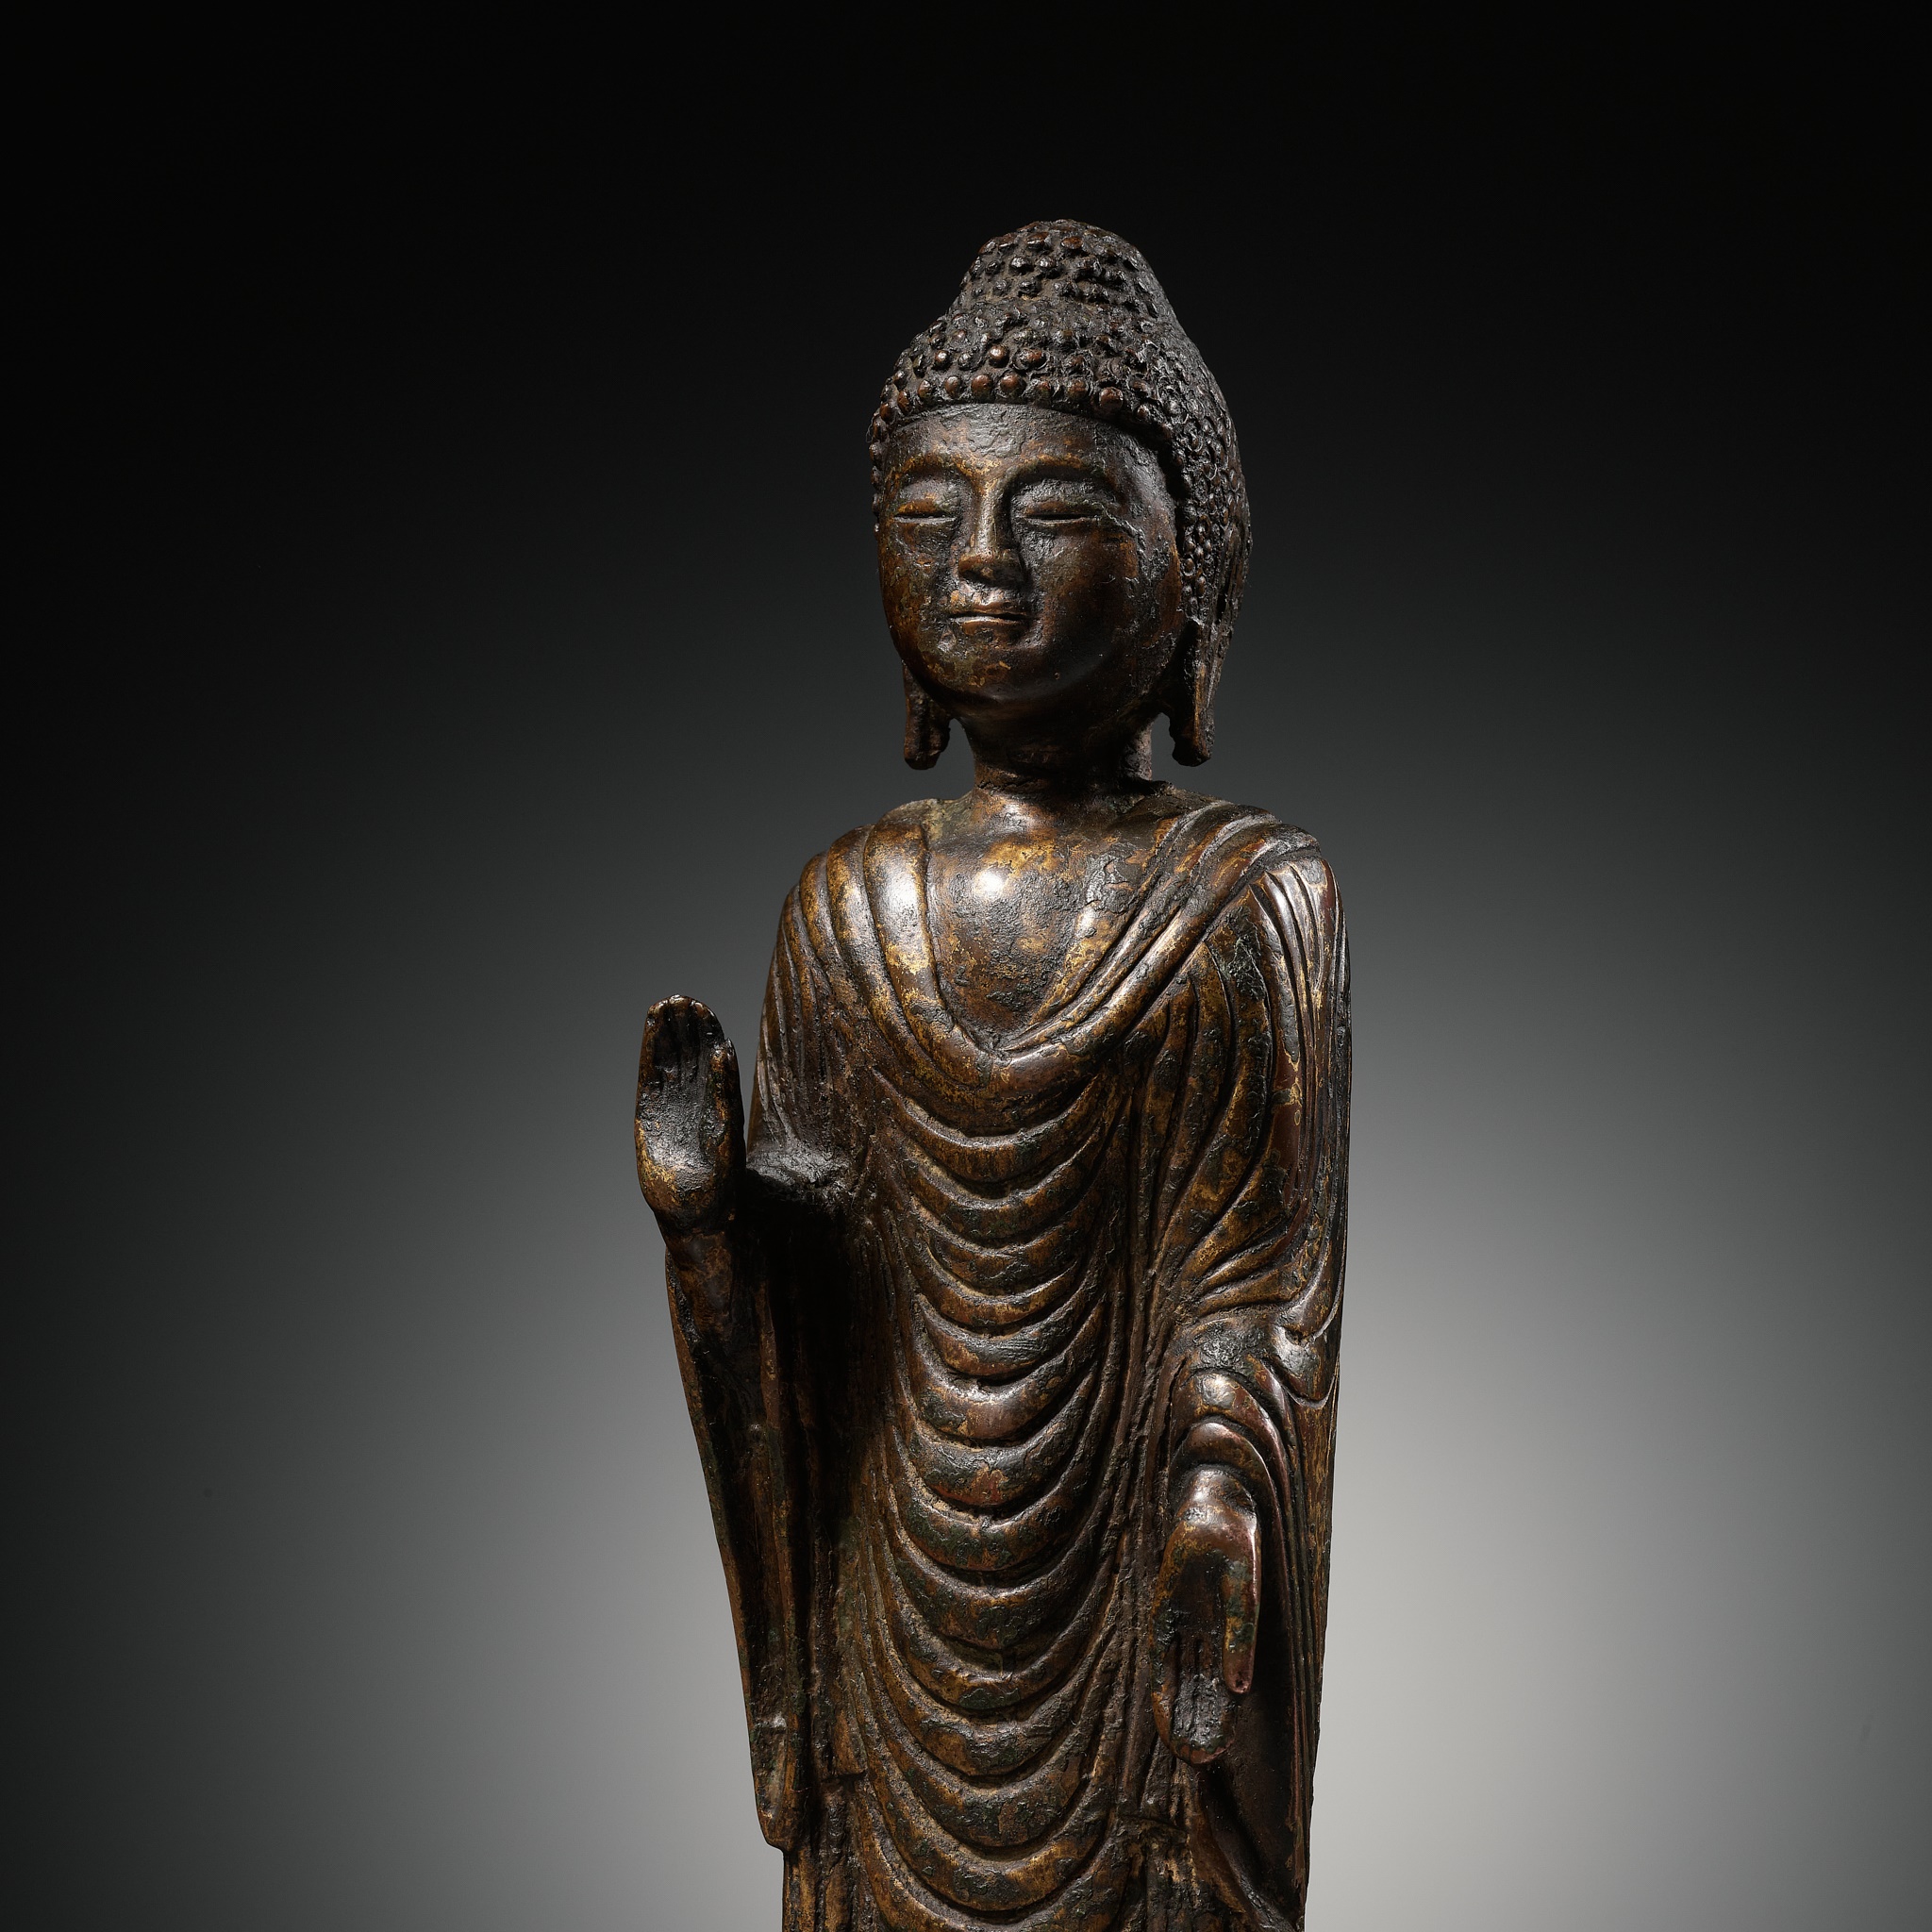 A GILT-BRONZE STANDING FIGURE OF BUDDHA, UNIFIED SILLA DYNASTY, KOREA, 8TH - 9TH CENTURY